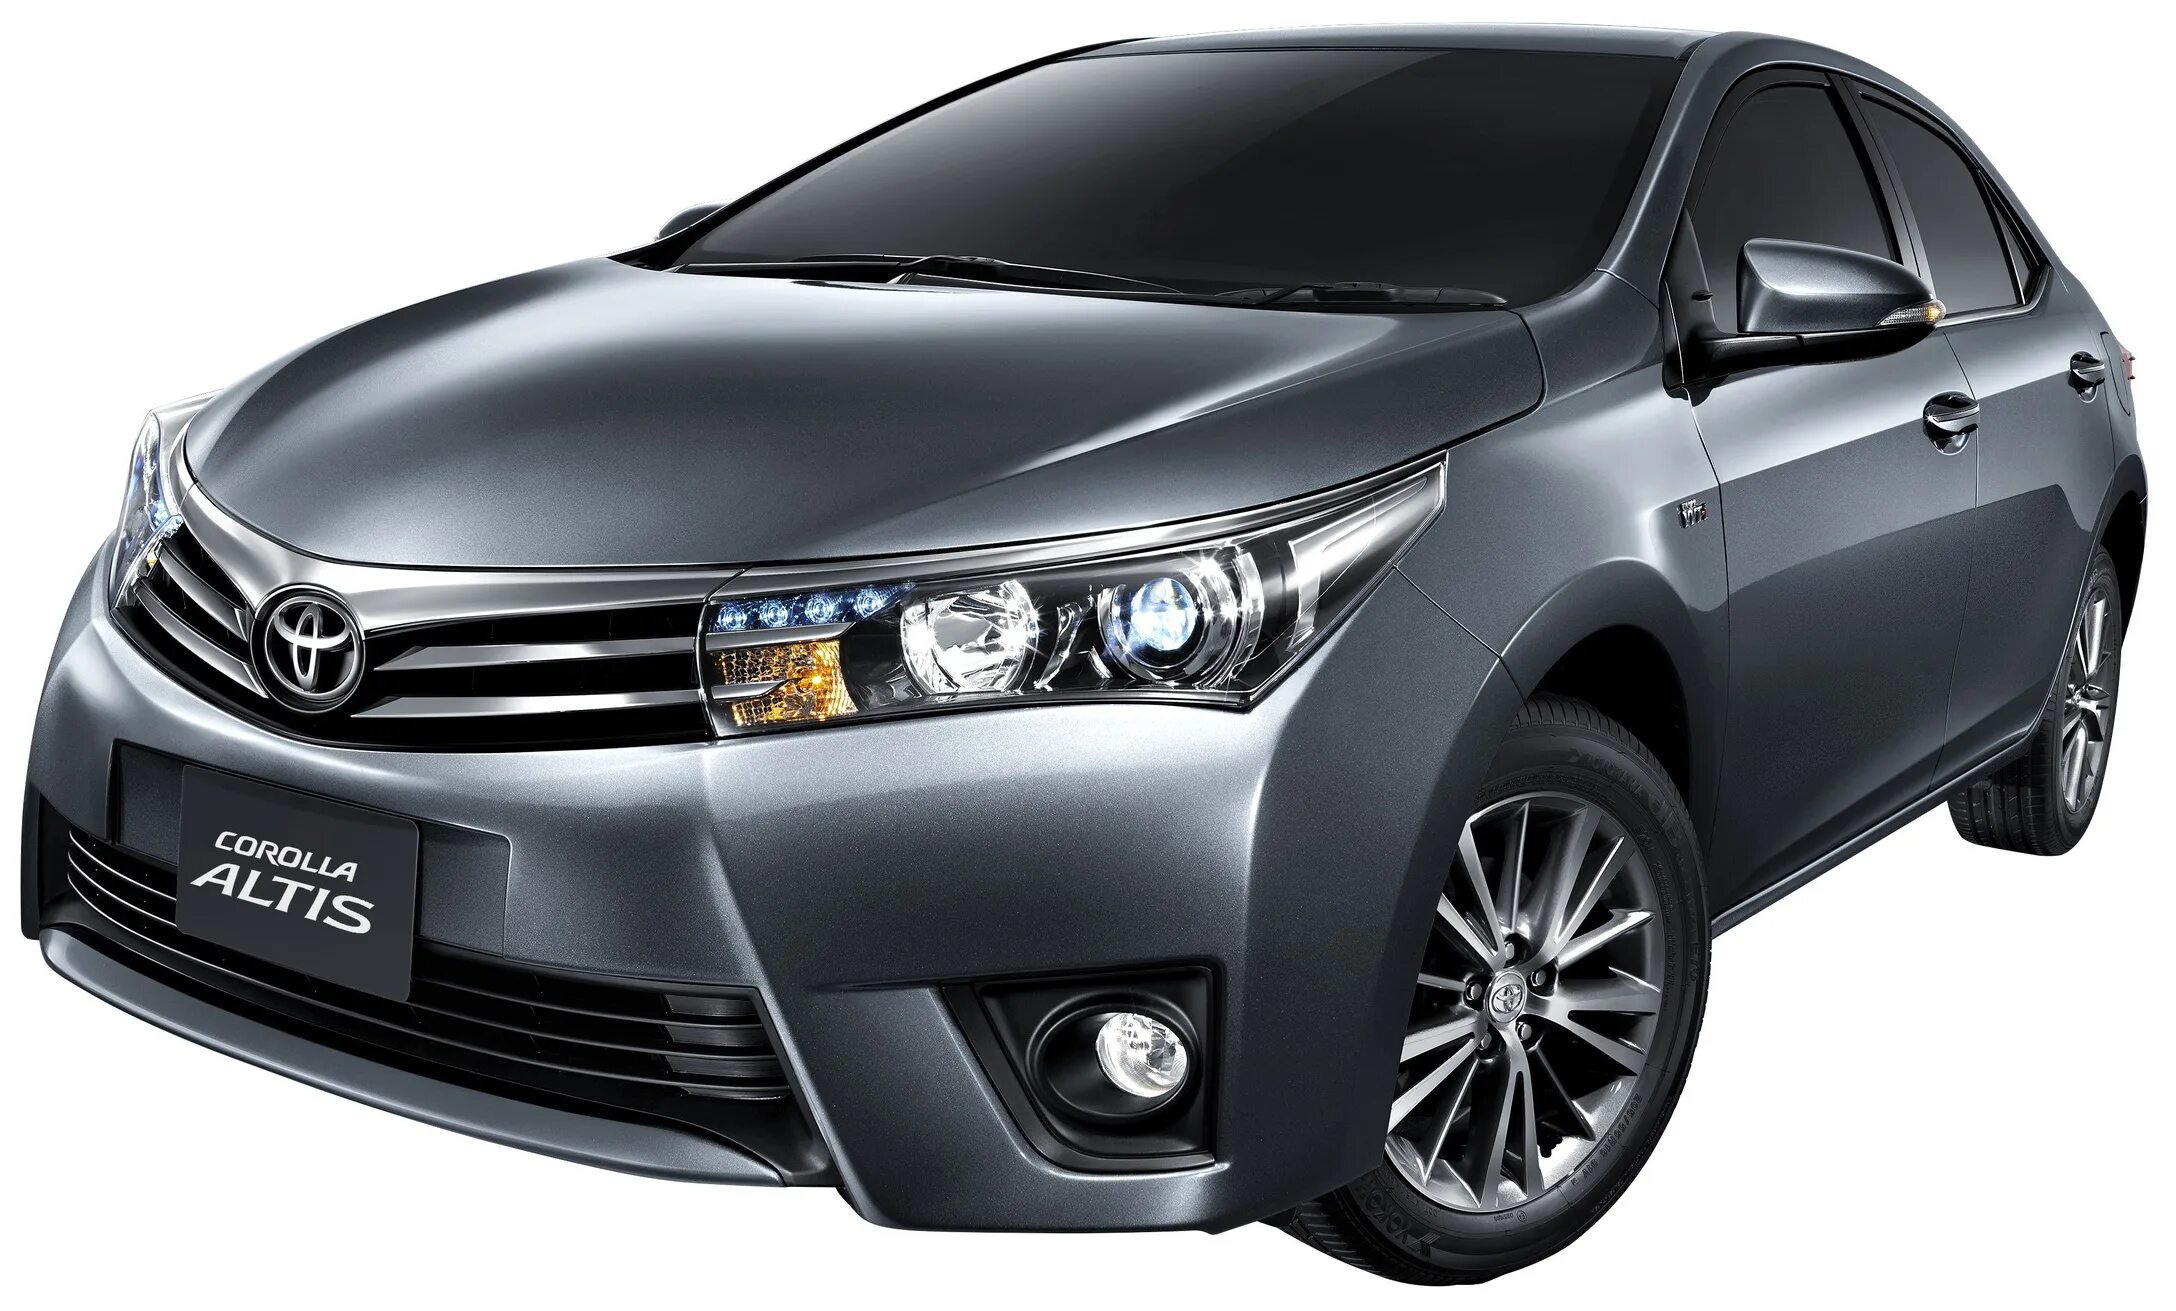 Toyota Altis 2016. Тойота Королла АЛТИС. Toyota Corolla Altis 2016. Toyota Corolla 2013. Купить короллу в приморском крае